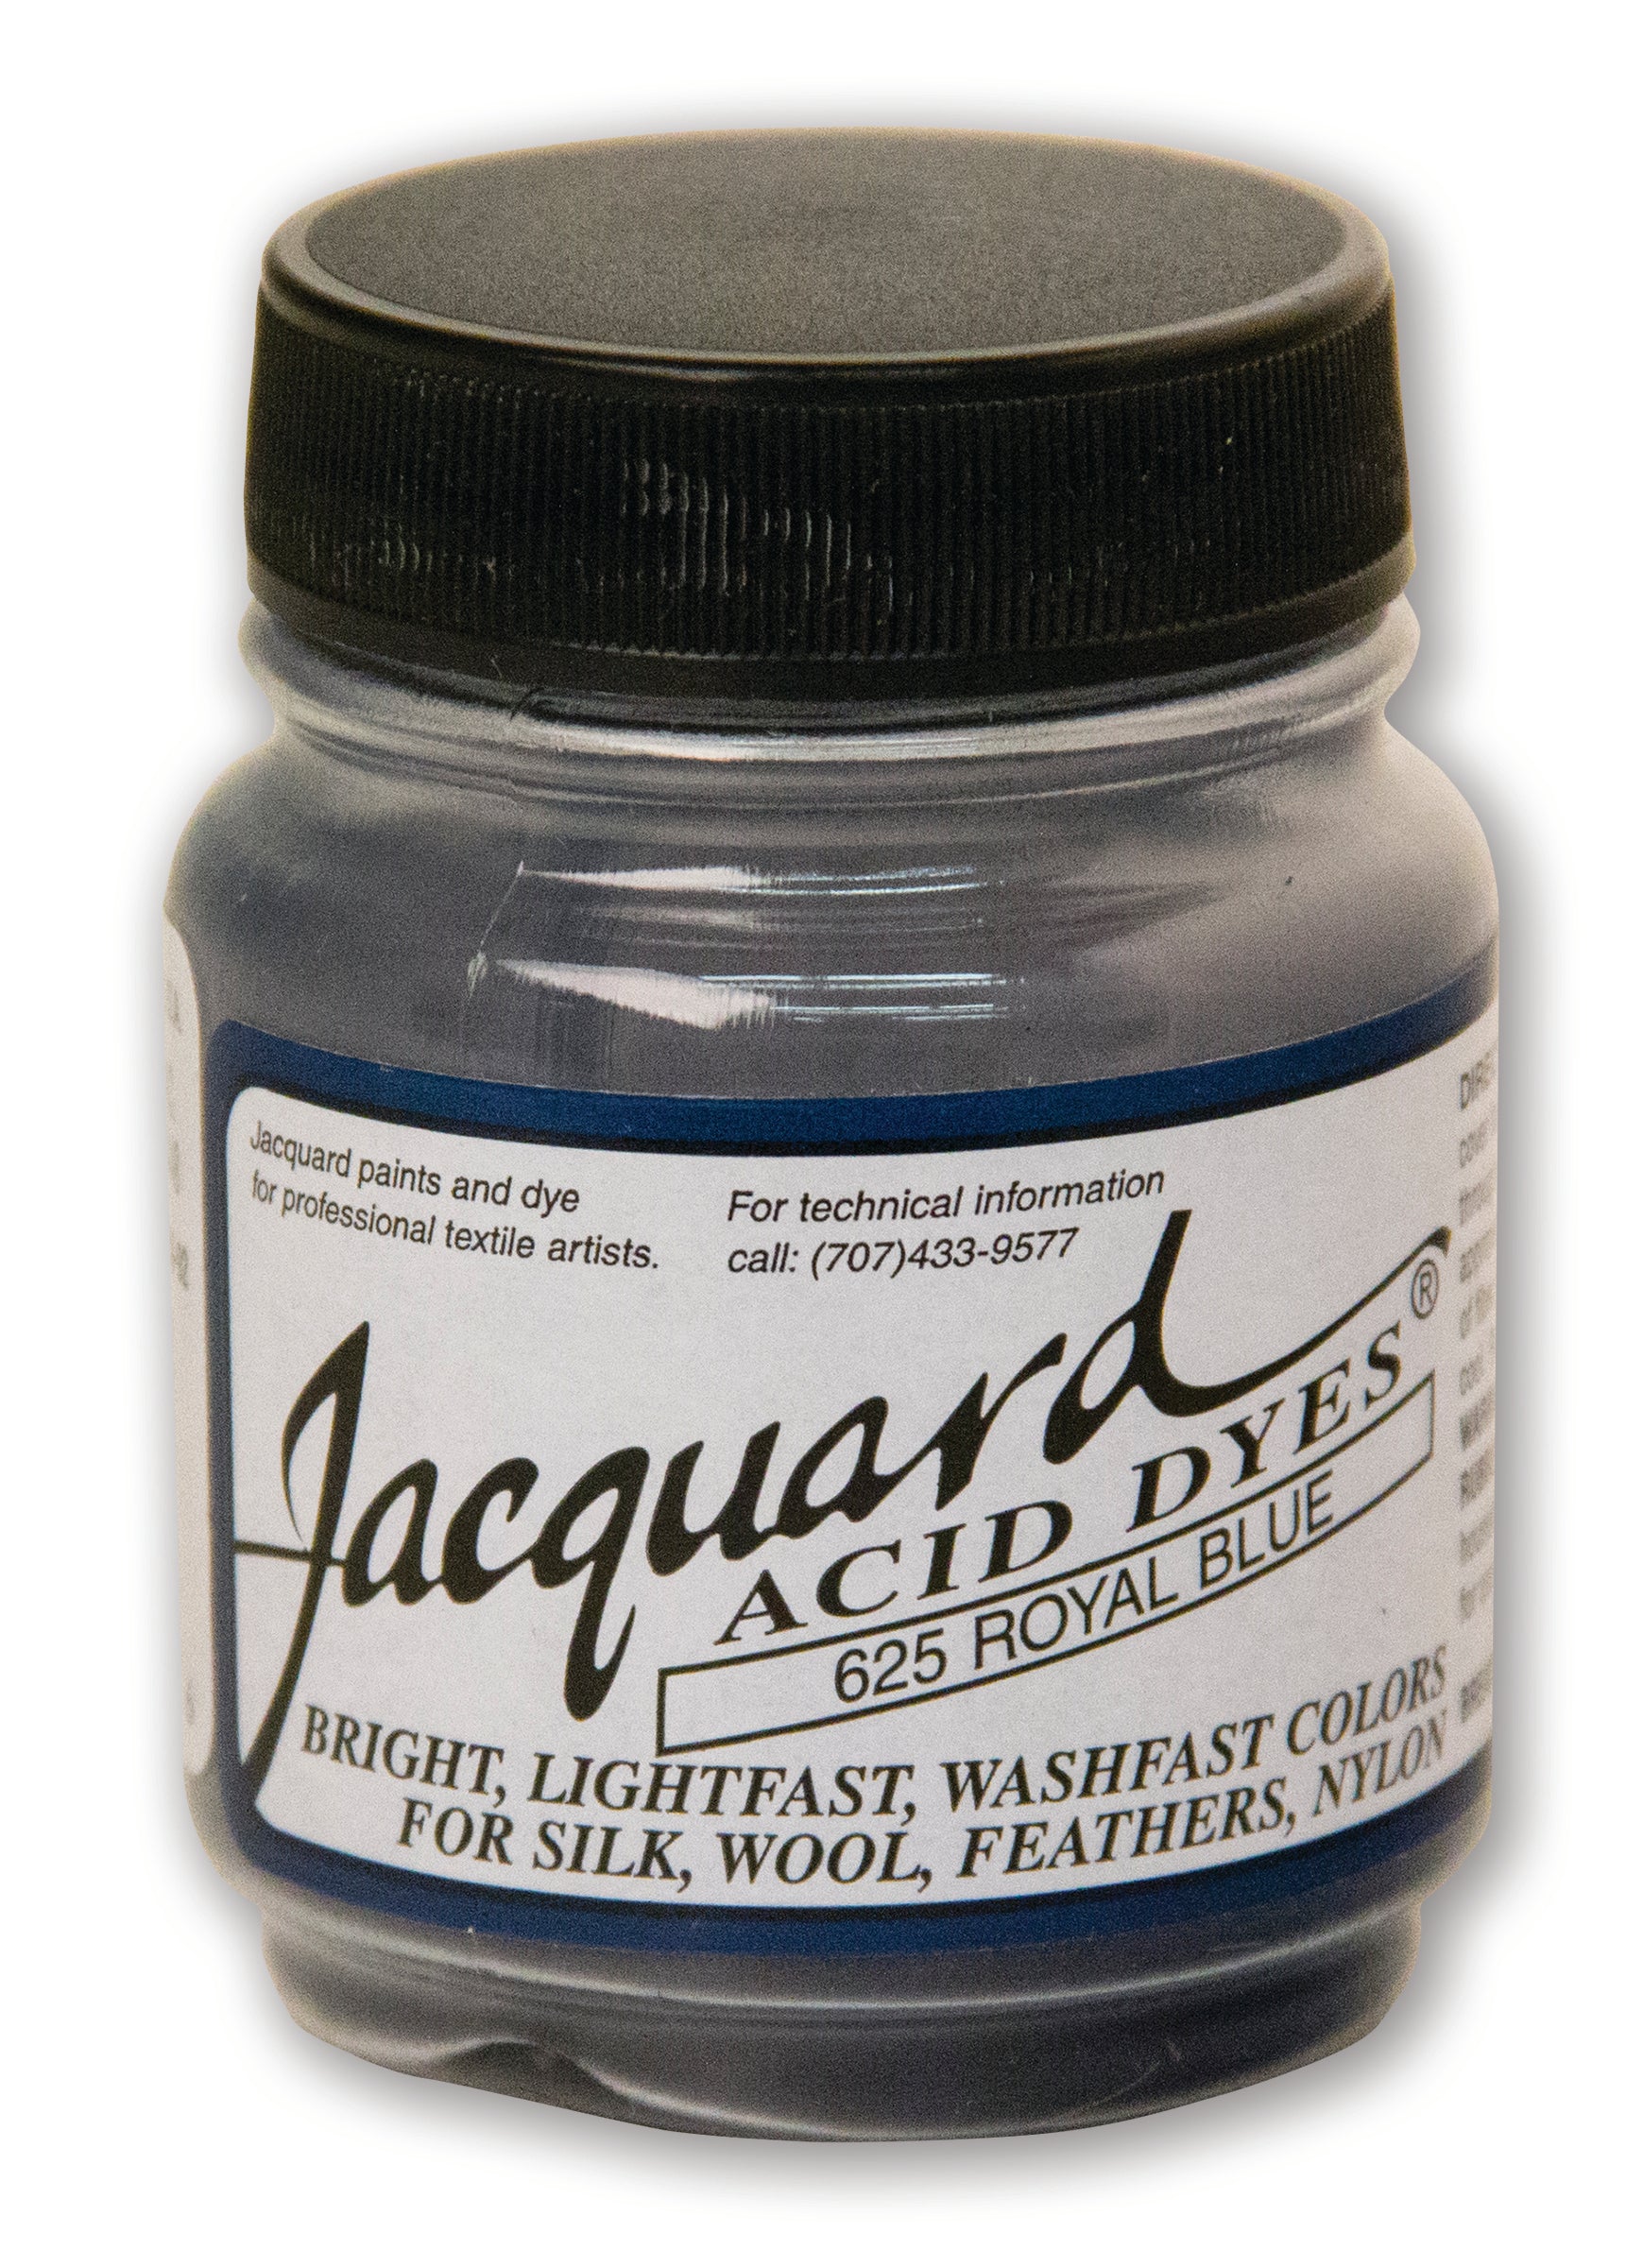 JACQUARD Acid Dye | Mollies Make And Create NZ